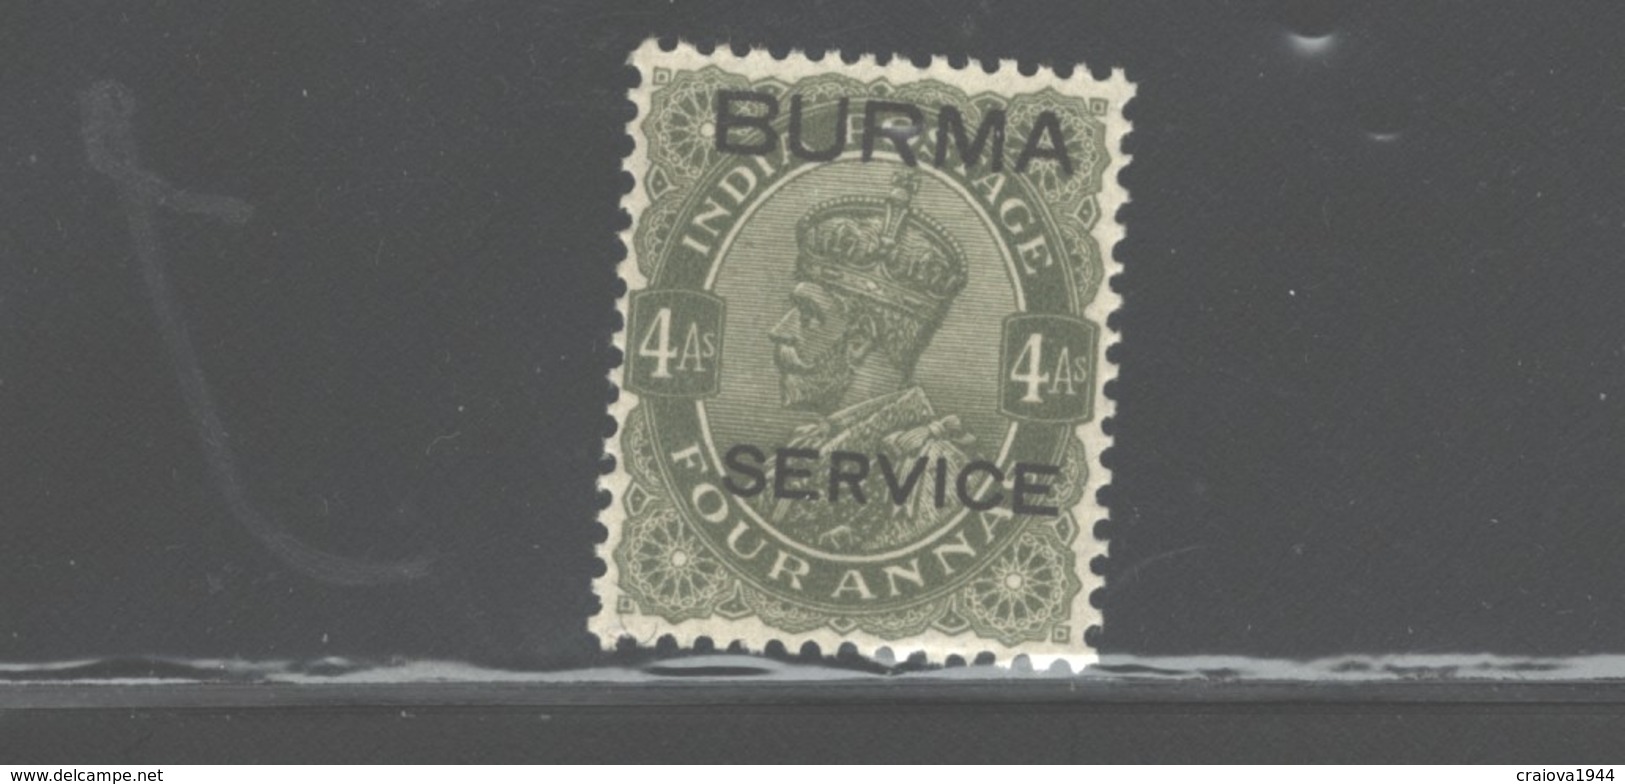 BURMA 1937 "BURMA - SERVICE OVPT." #O7 MNH - Burma (...-1947)